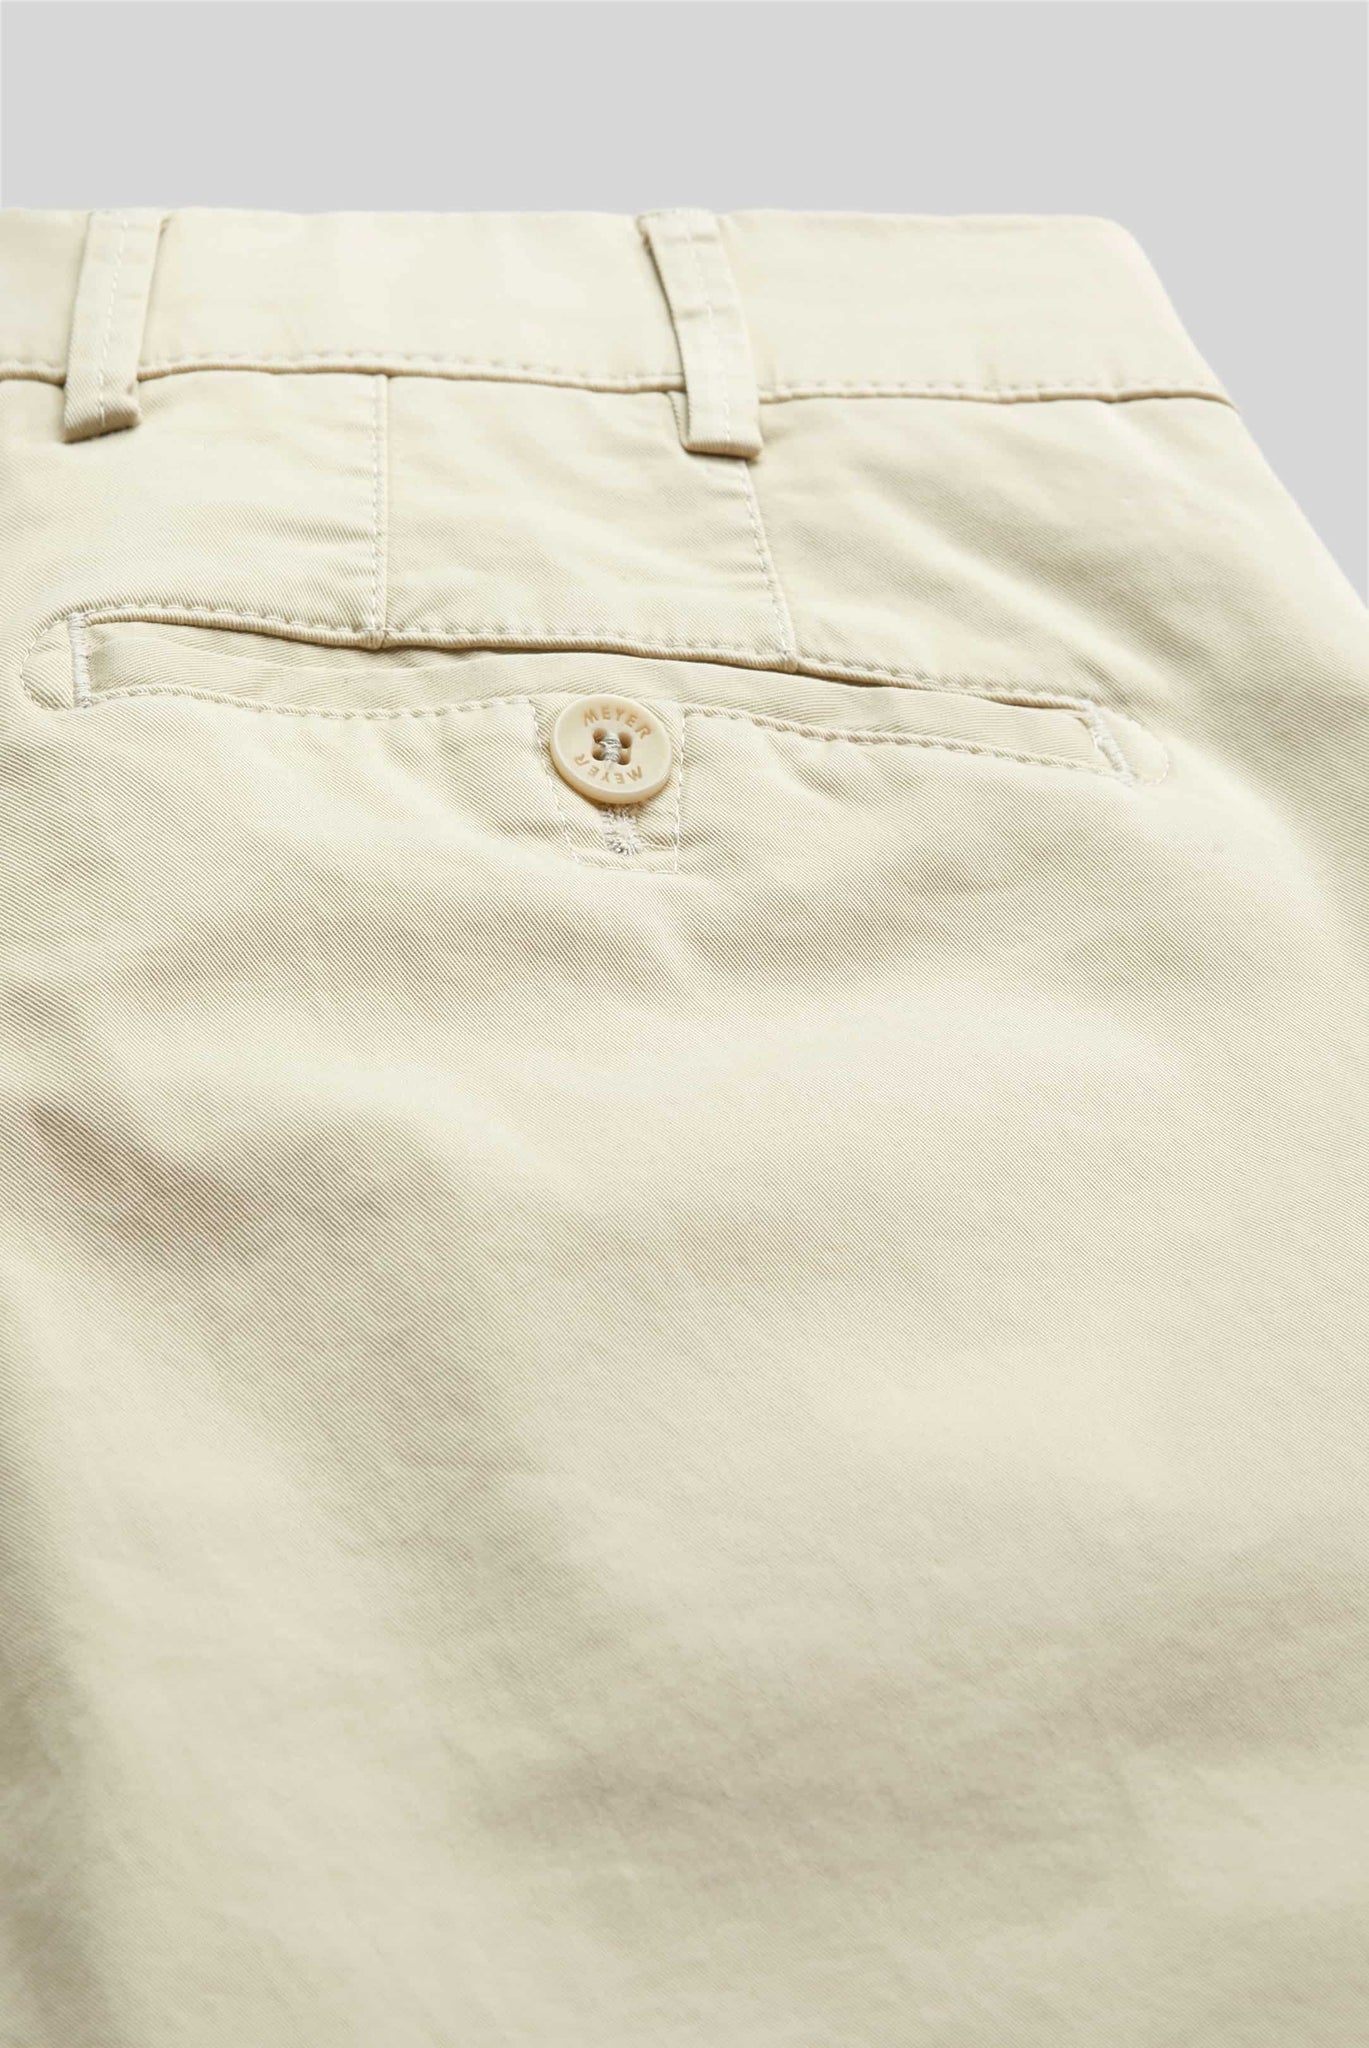 MEYER Trousers - Roma 3001 Light-Weight Fairtrade Cotton Chinos - Beig ...